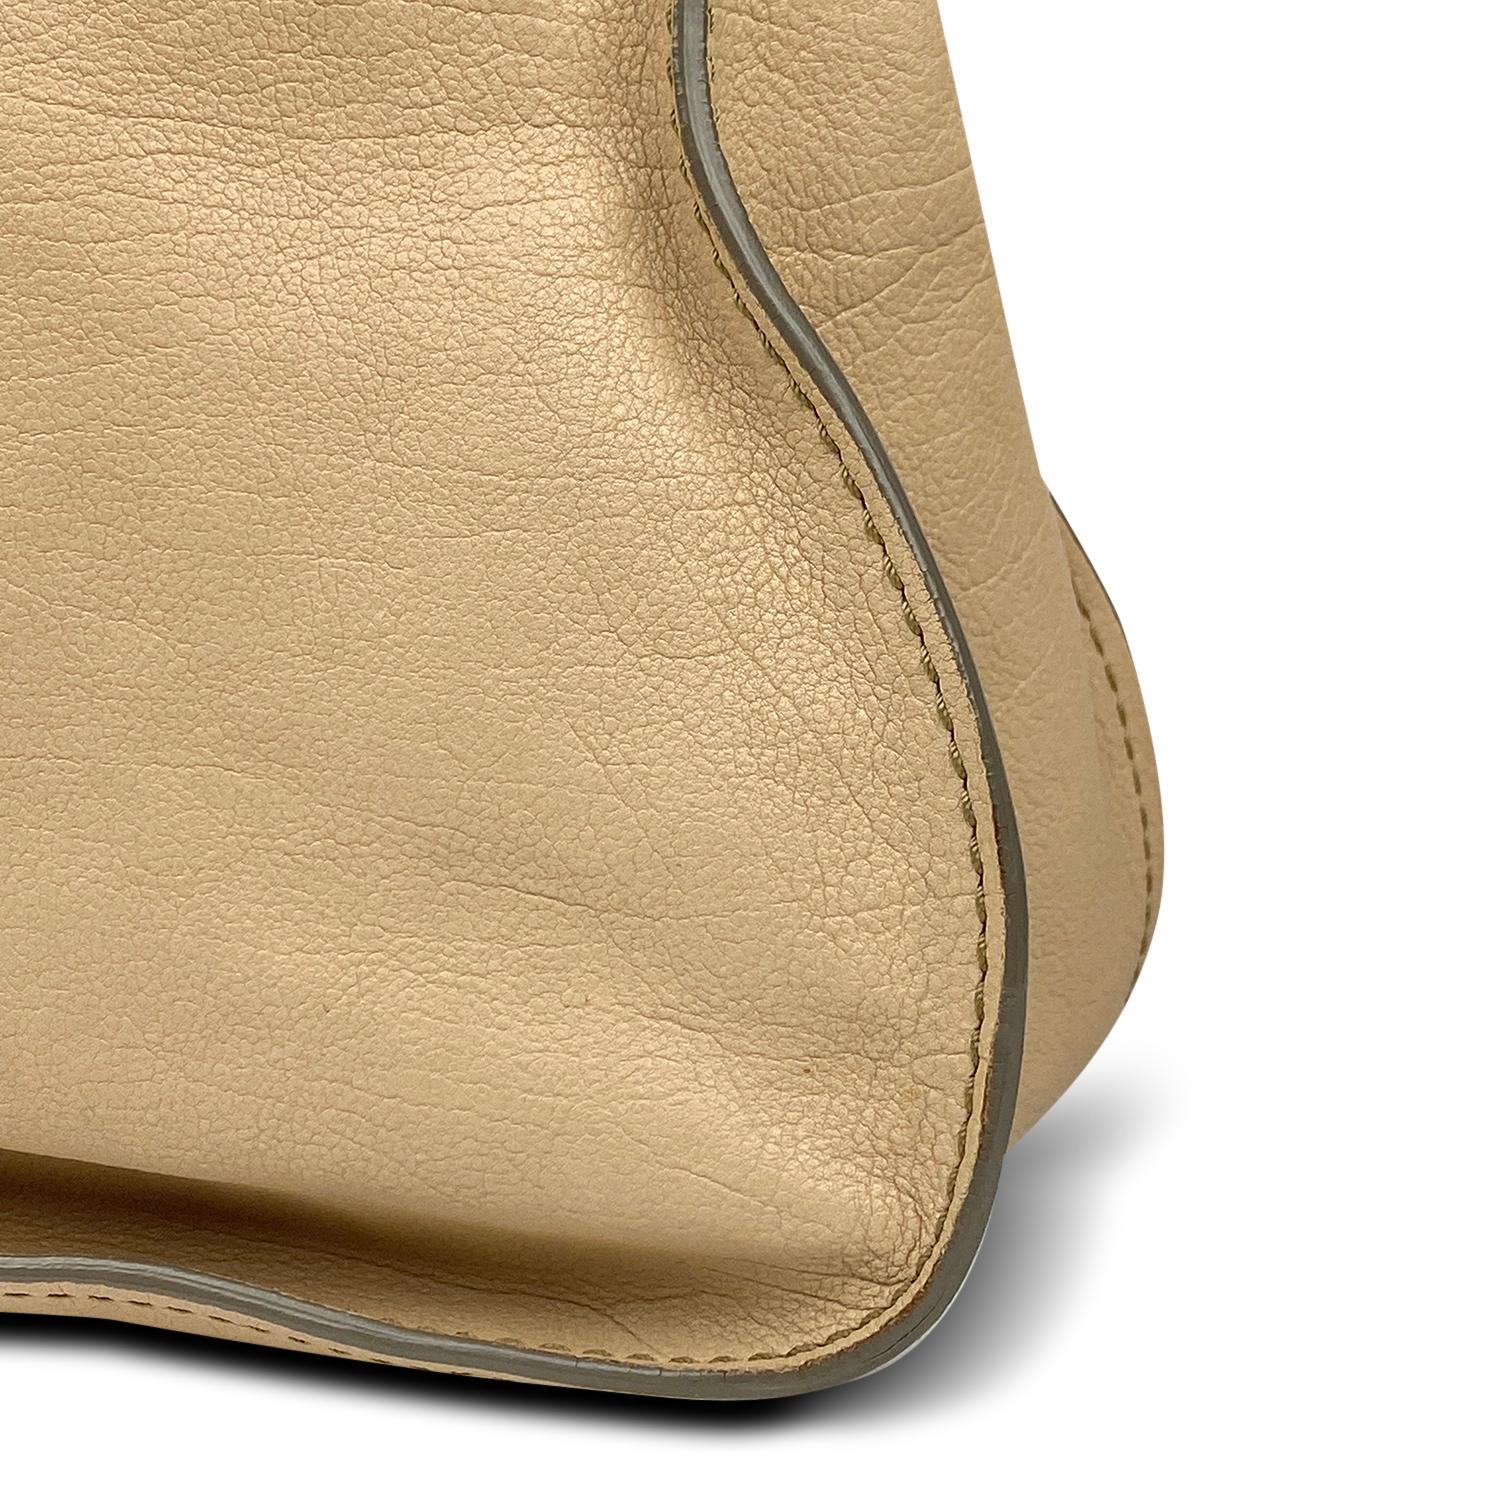 Chloé Marcie Leather Shoulder bag In Good Condition For Sale In Sundbyberg, SE